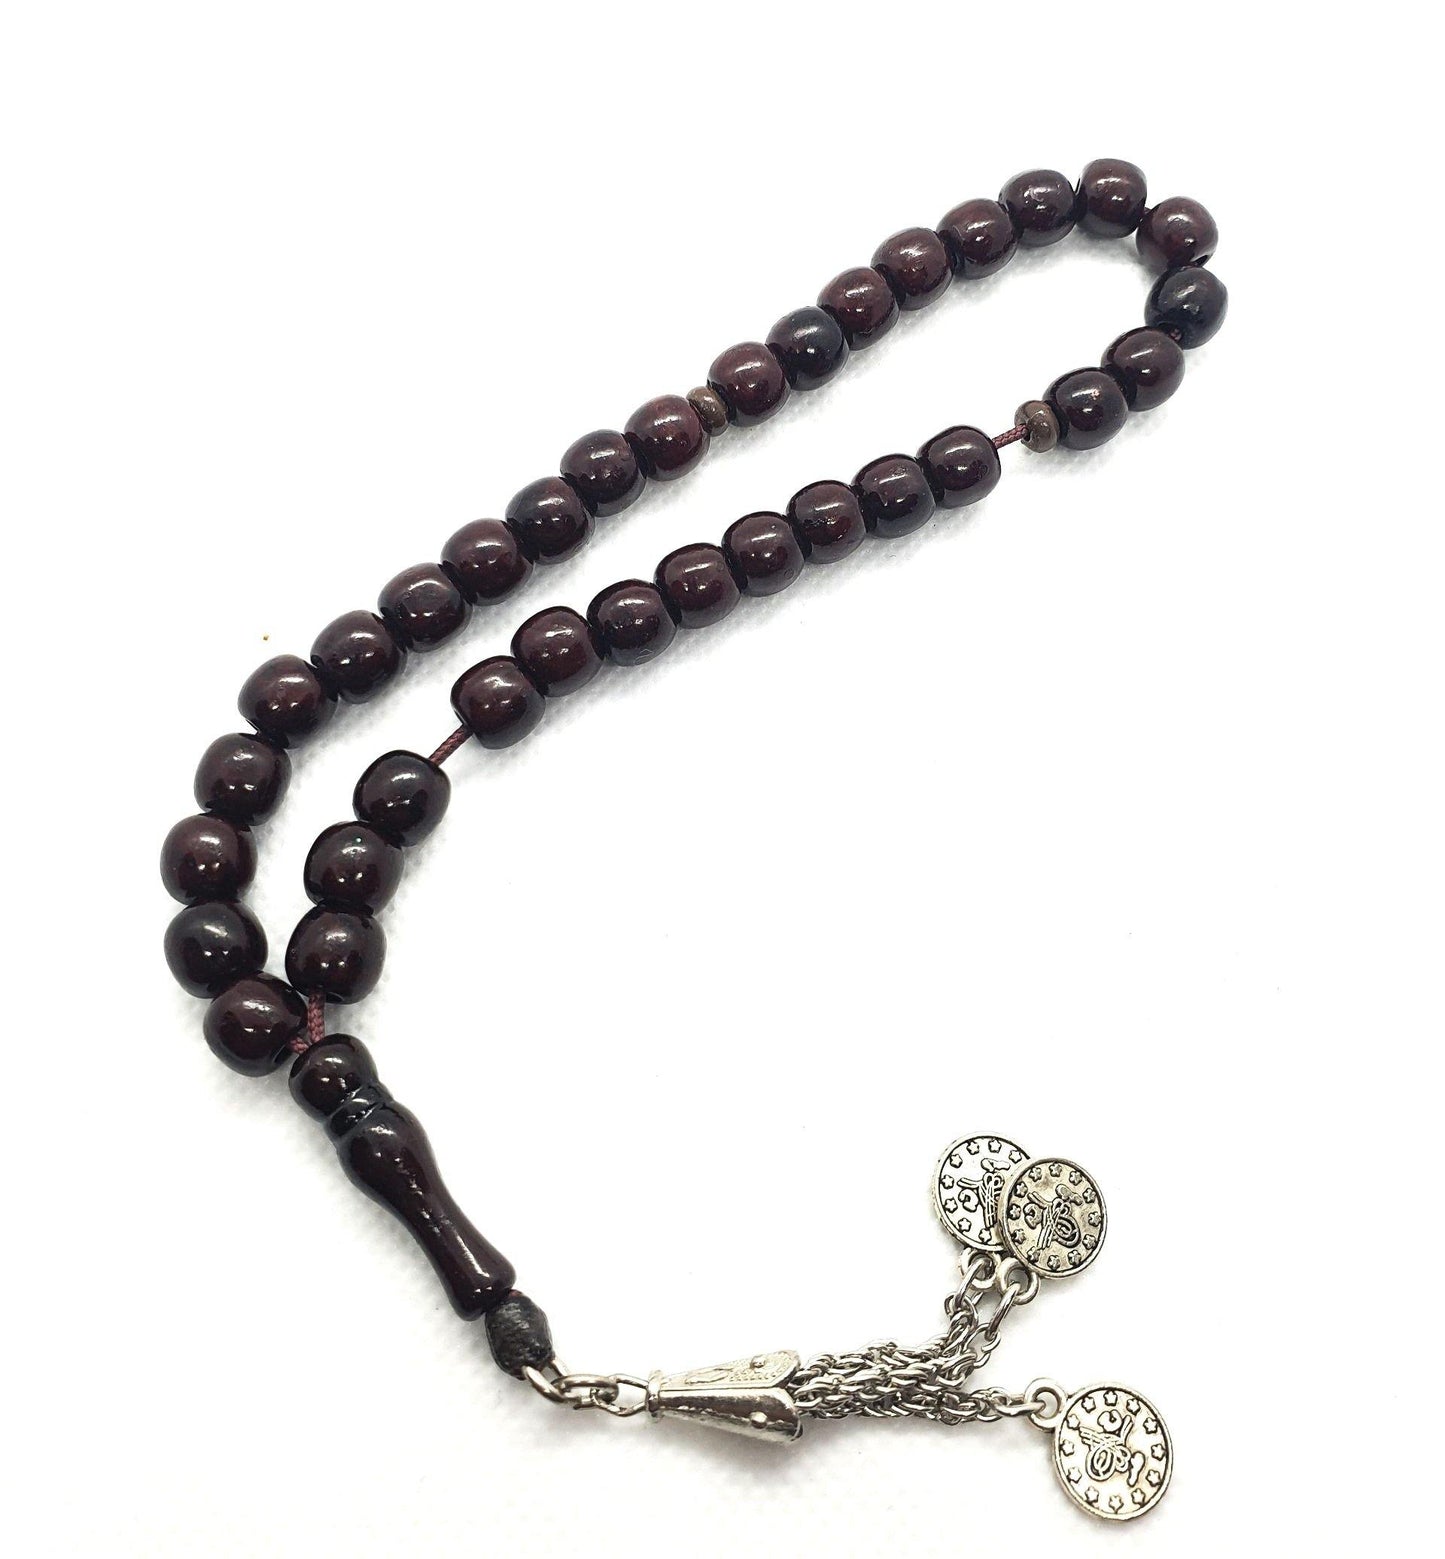 Aged Master Craft Wooden Prayer Beads